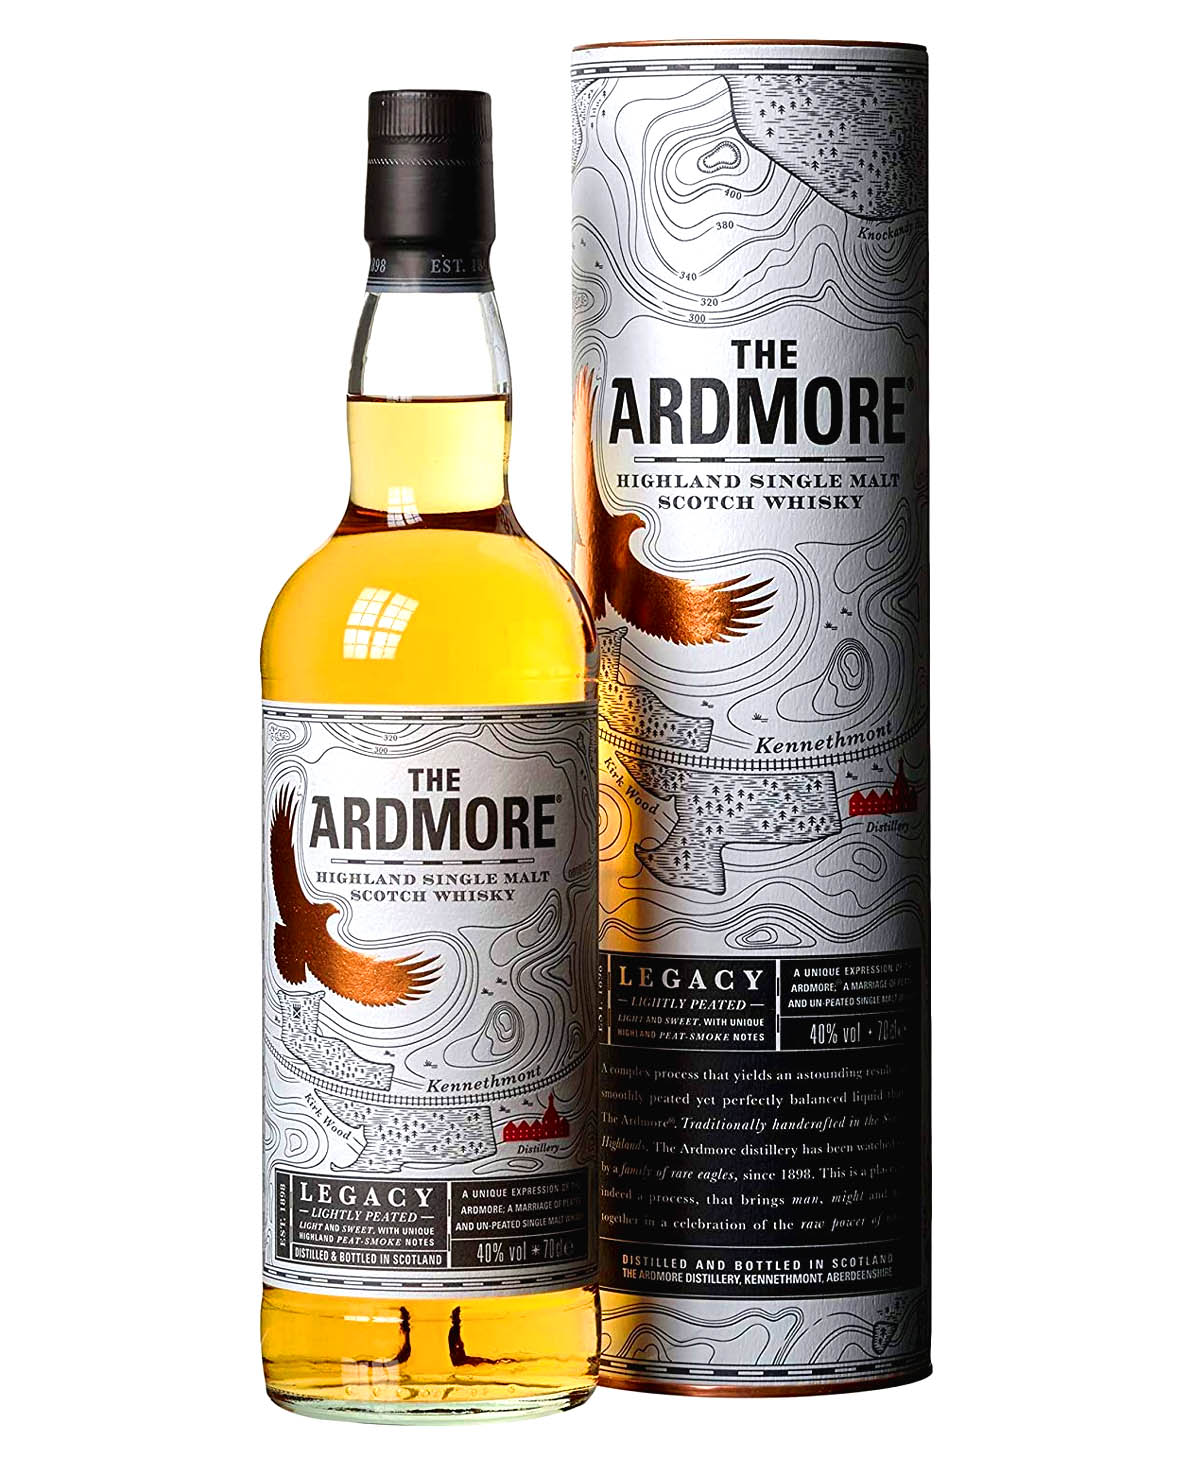 Highland single malt scotch. Highland Single Malt Scotch Whisky. Ardmore виски. The Ardmore Highland Single Malt. Русский виски.